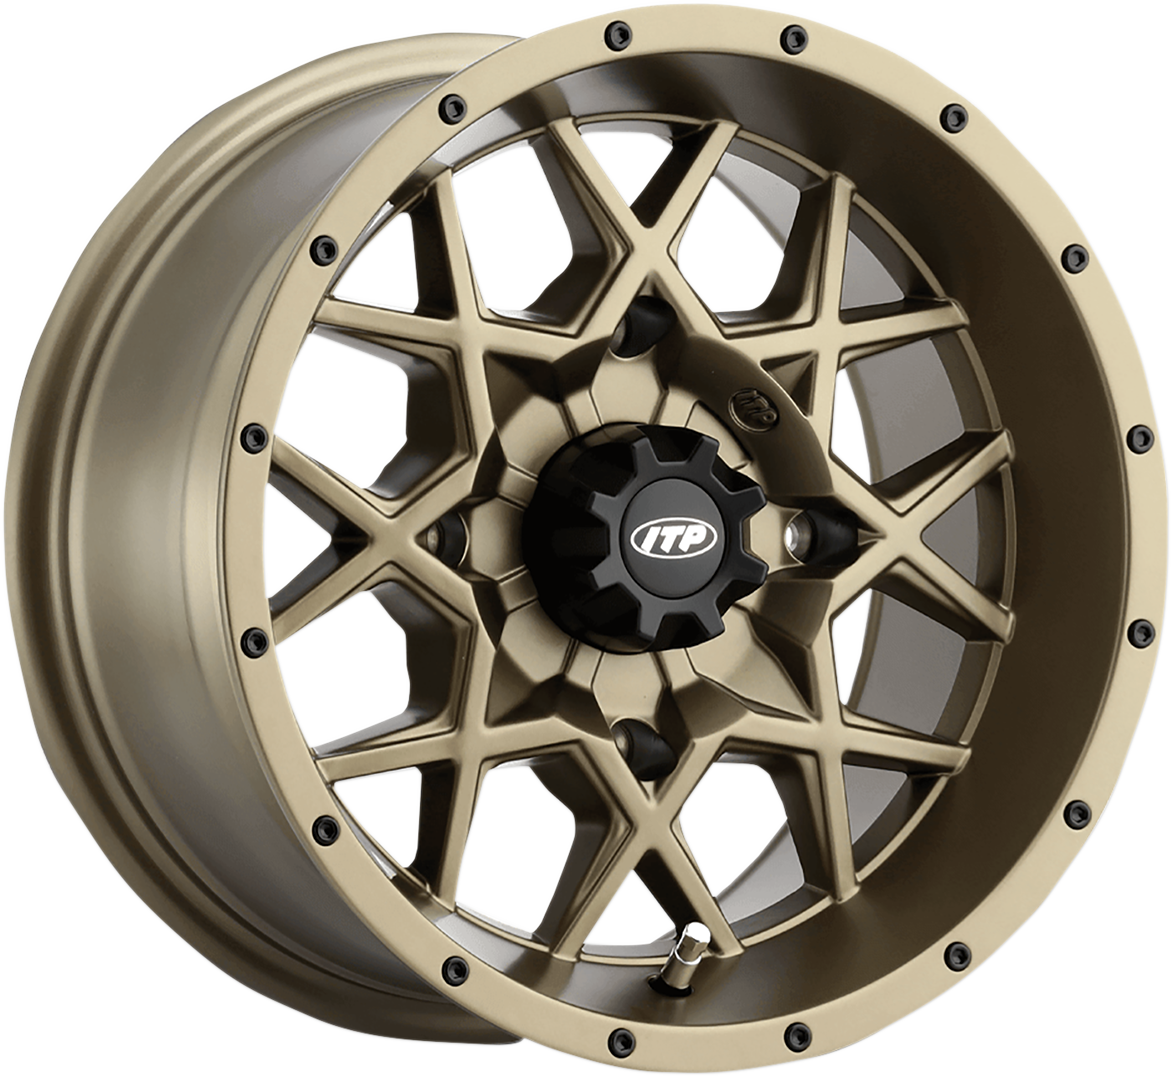 ITP Wheel - Hurricane - Front/Rear - Bronze - 15x7 - 4/137 - 5+2 1528645729B